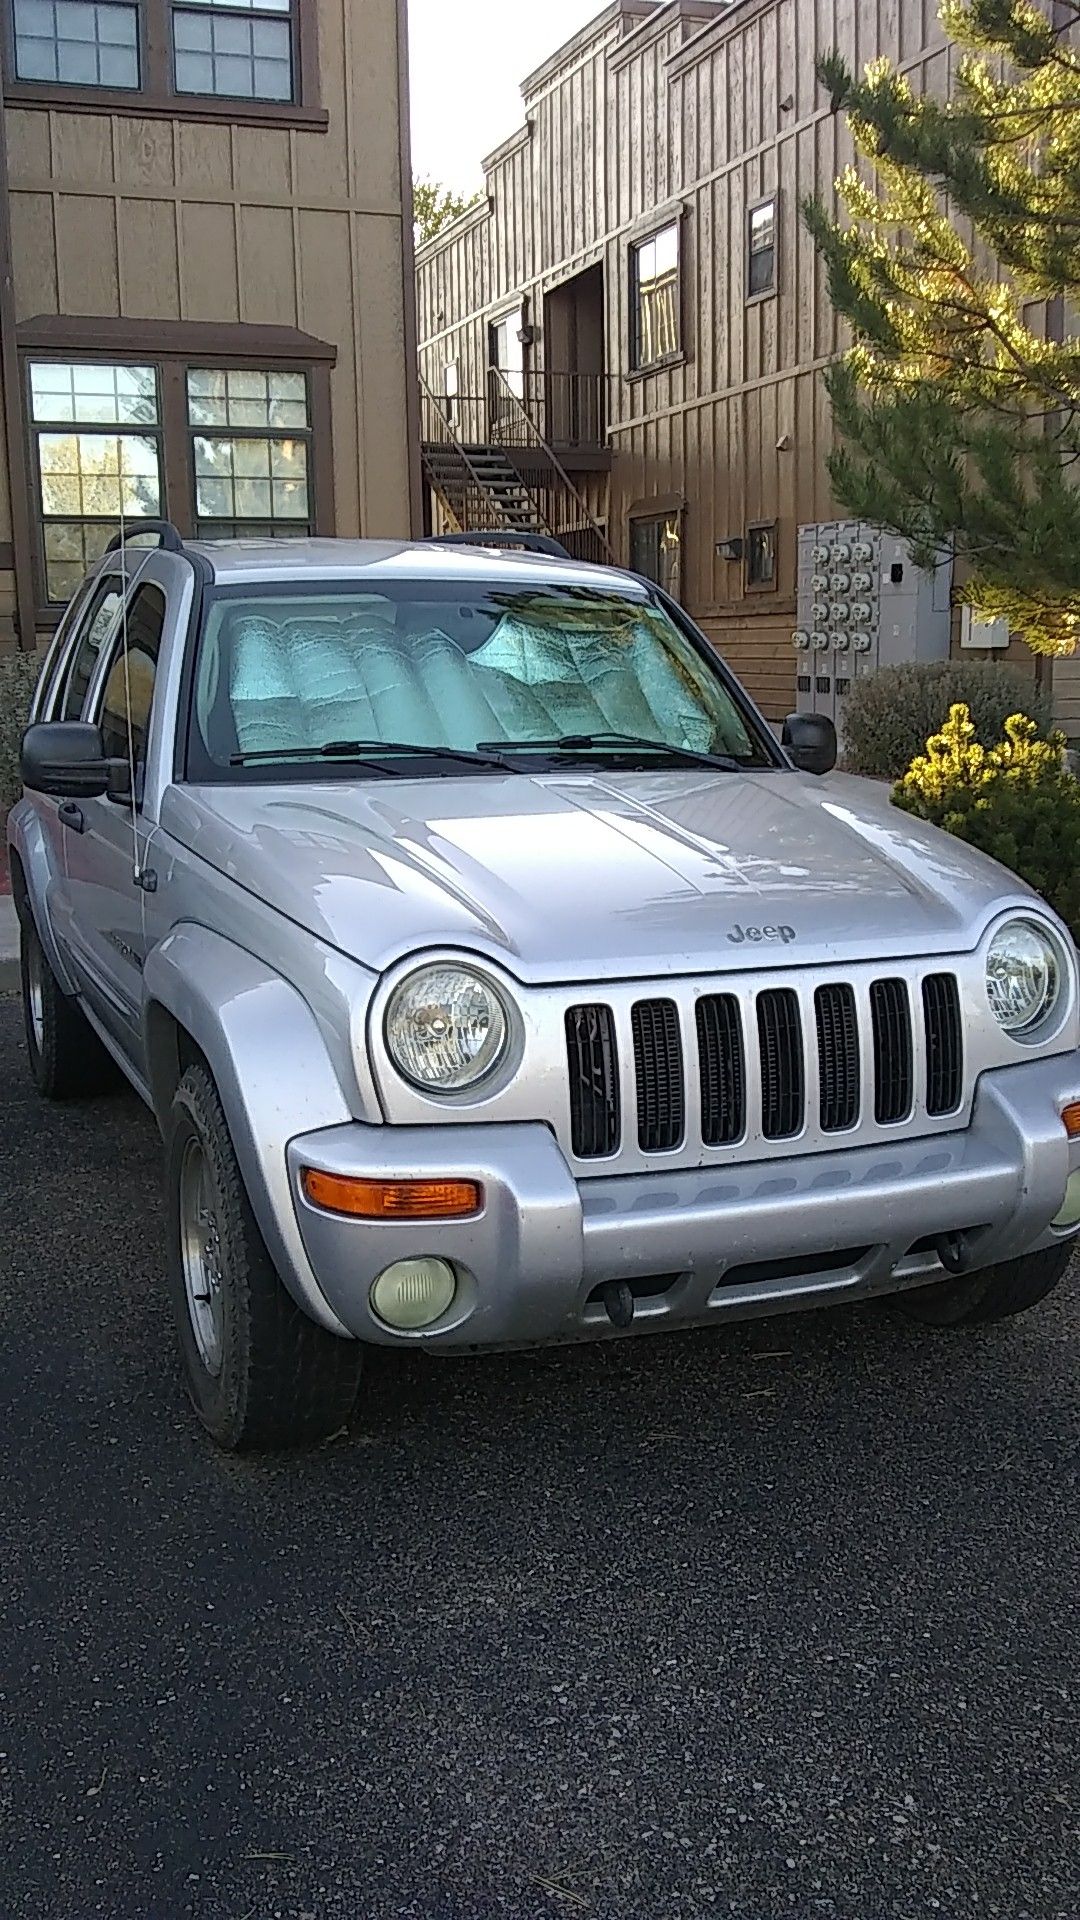 2003 Jeep Liberty